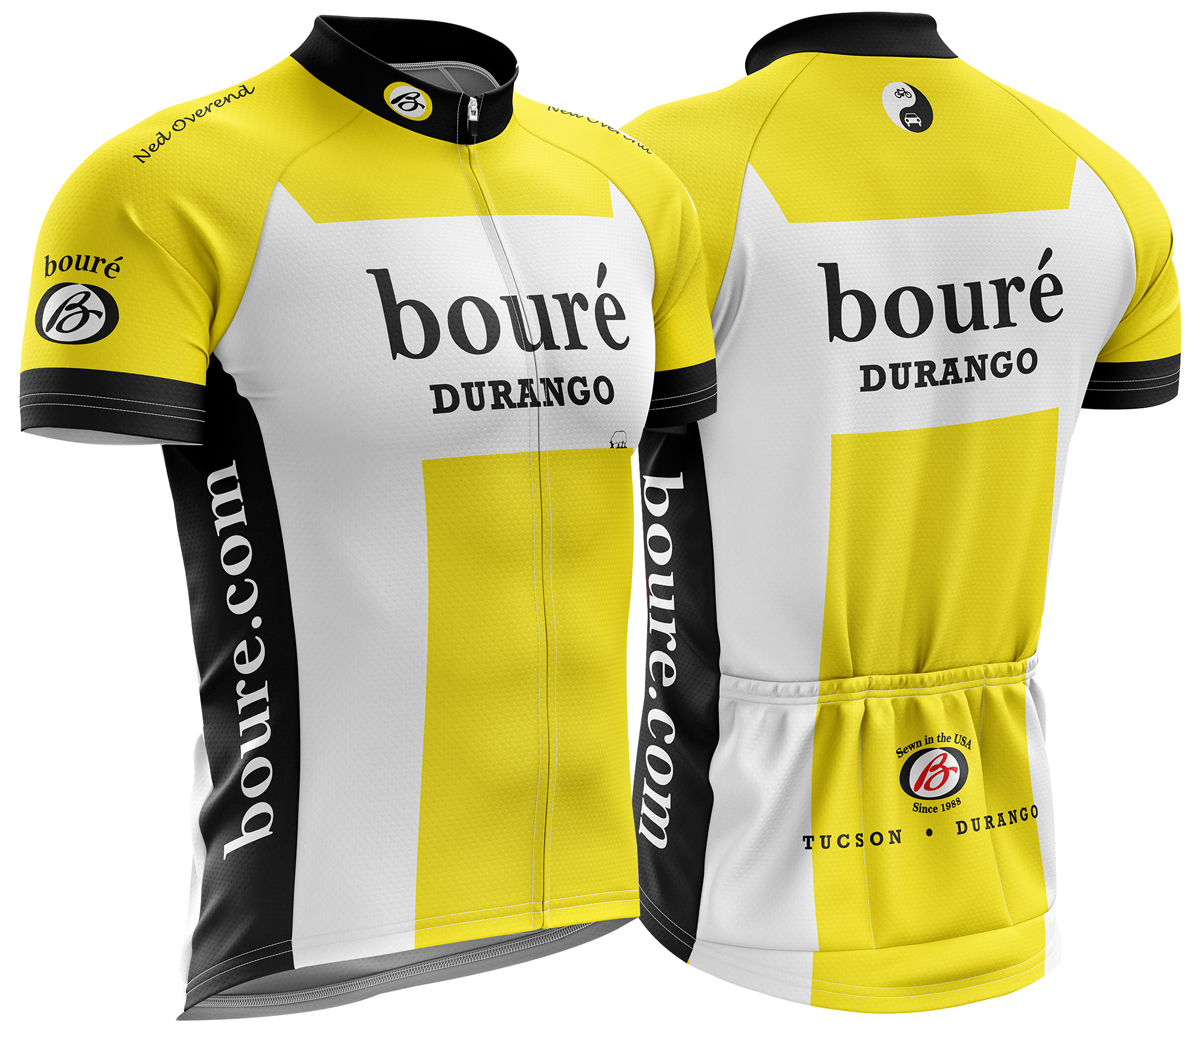 2021 mens team cycling jeresys cycling jeresy cycling Short sleeve Jersey 